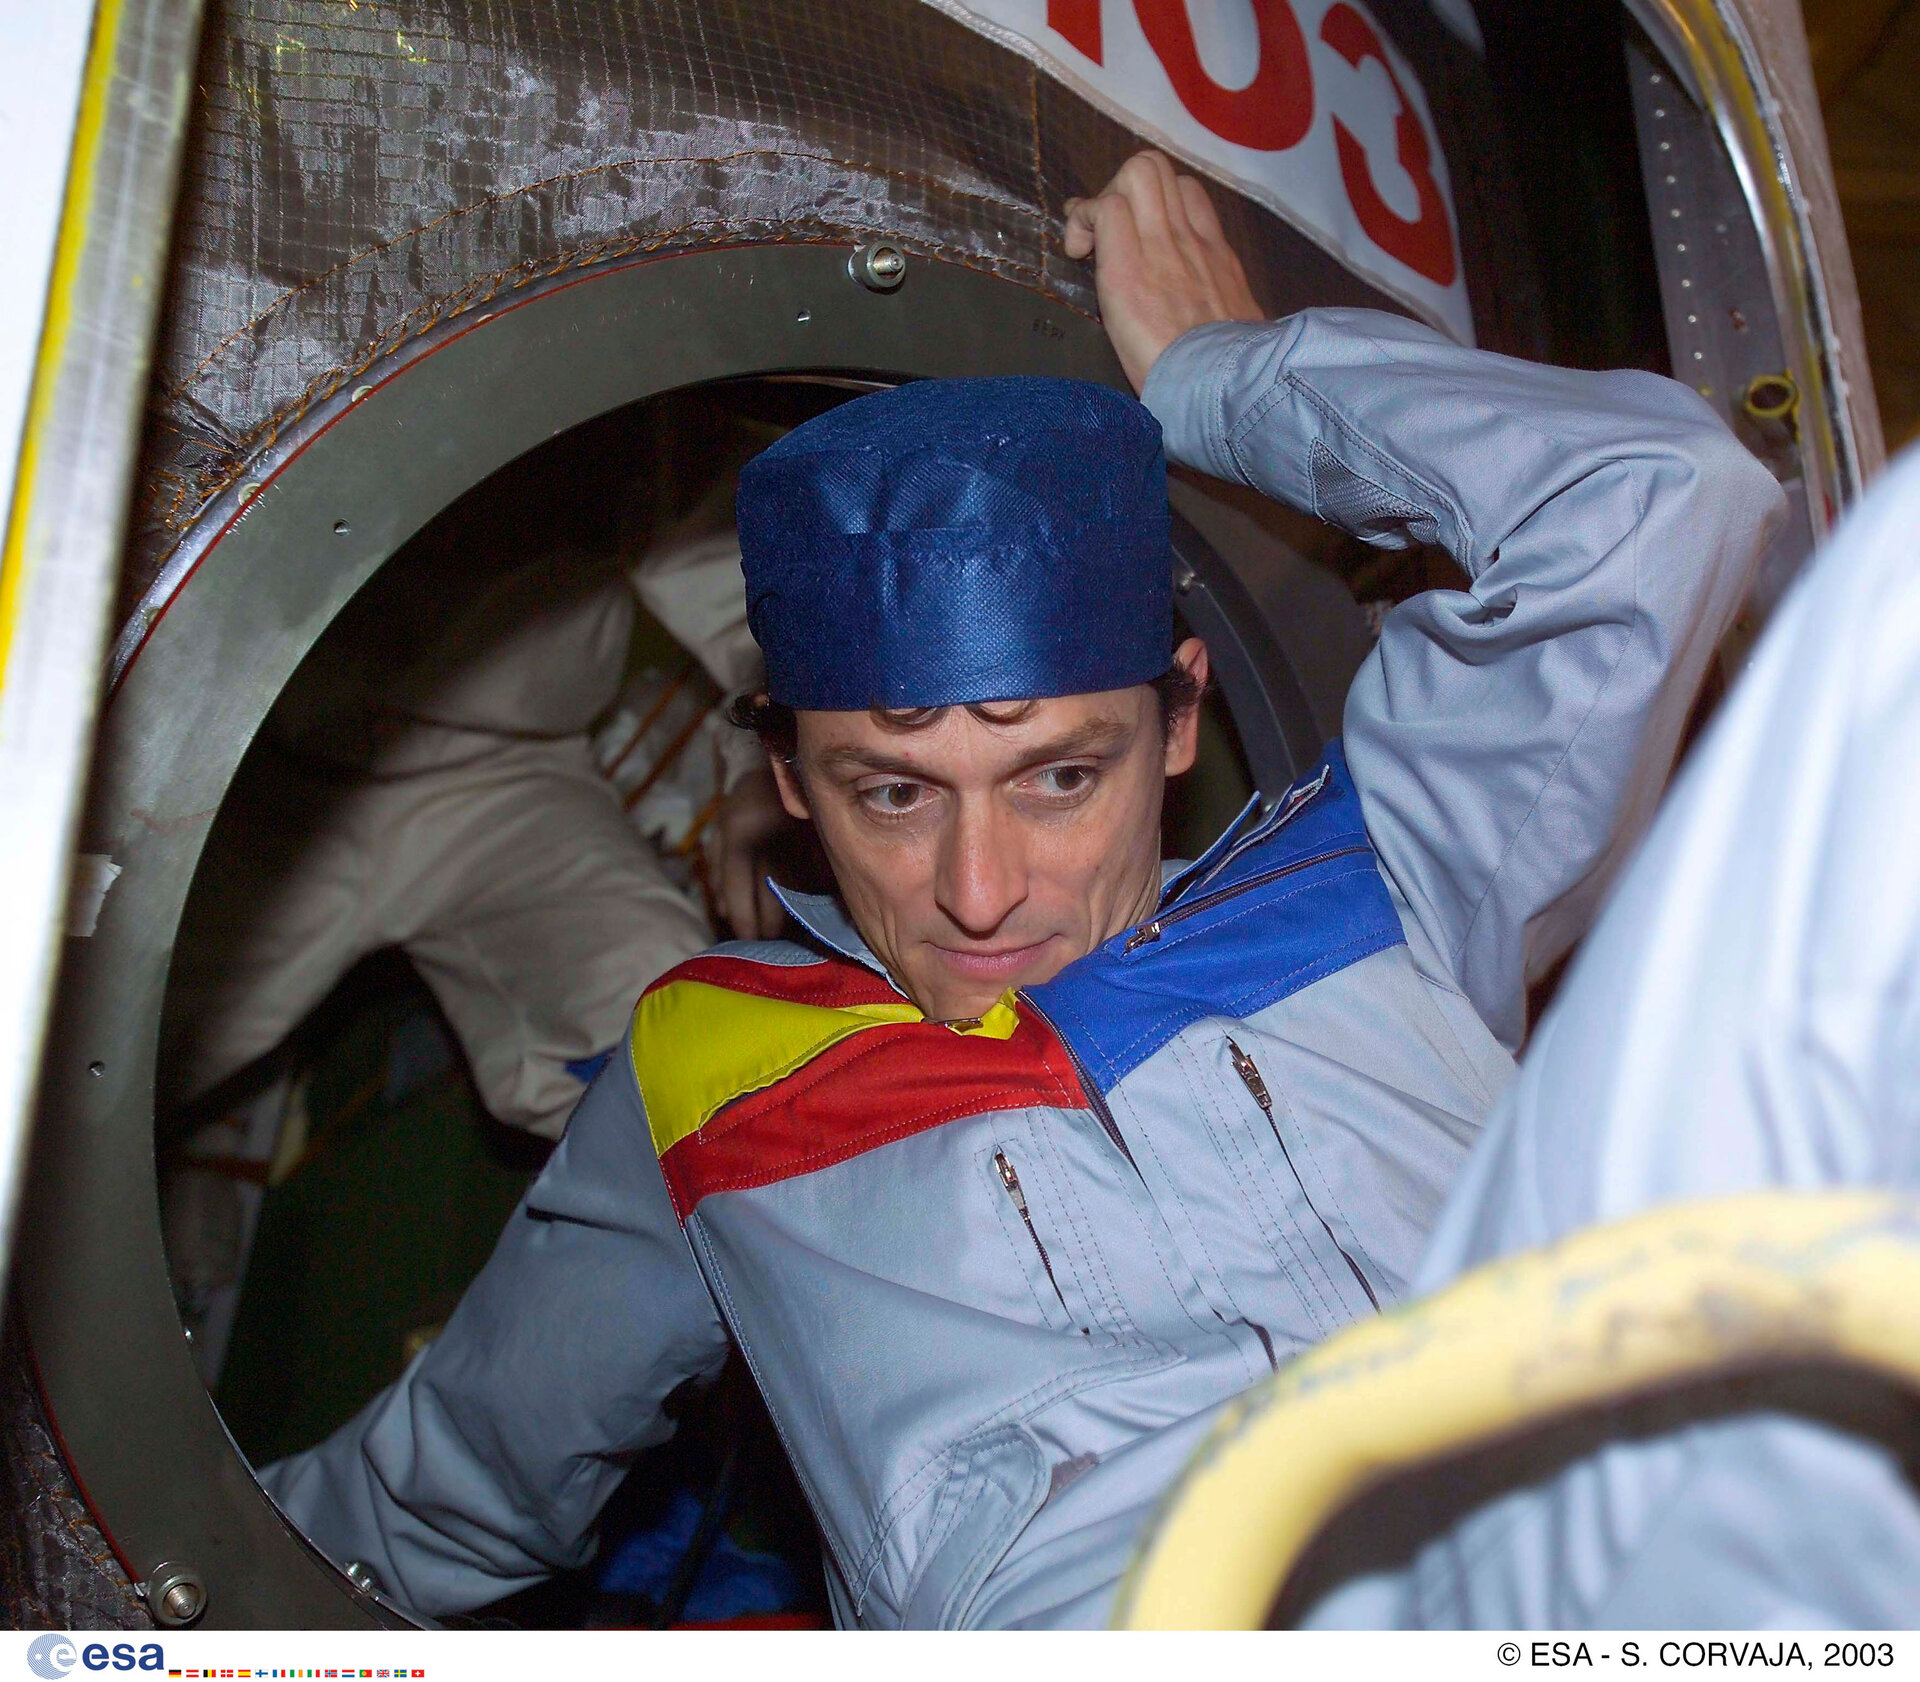 Pedro Duque inspects the Soyuz TMA-3 capsule